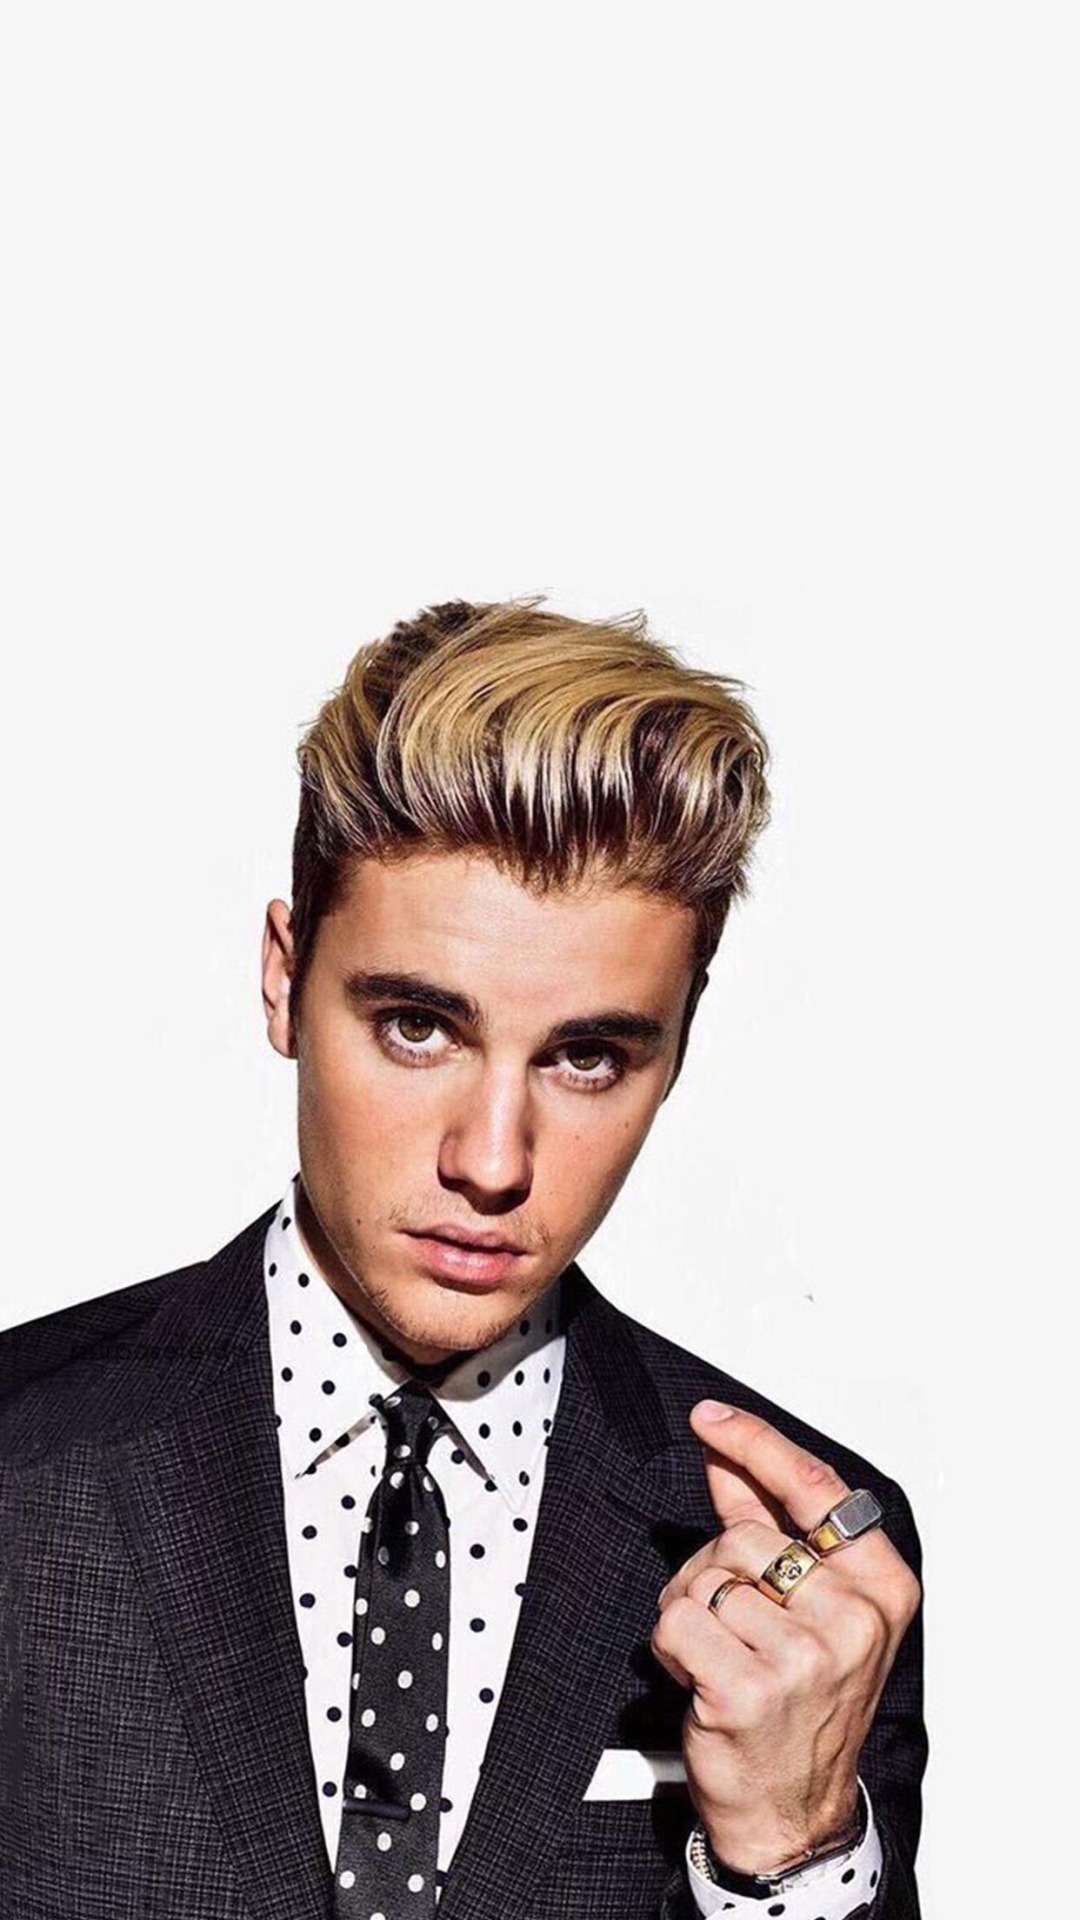 Free Download Justin Bieber Wallpapers Top Justin Bieber Backgrounds